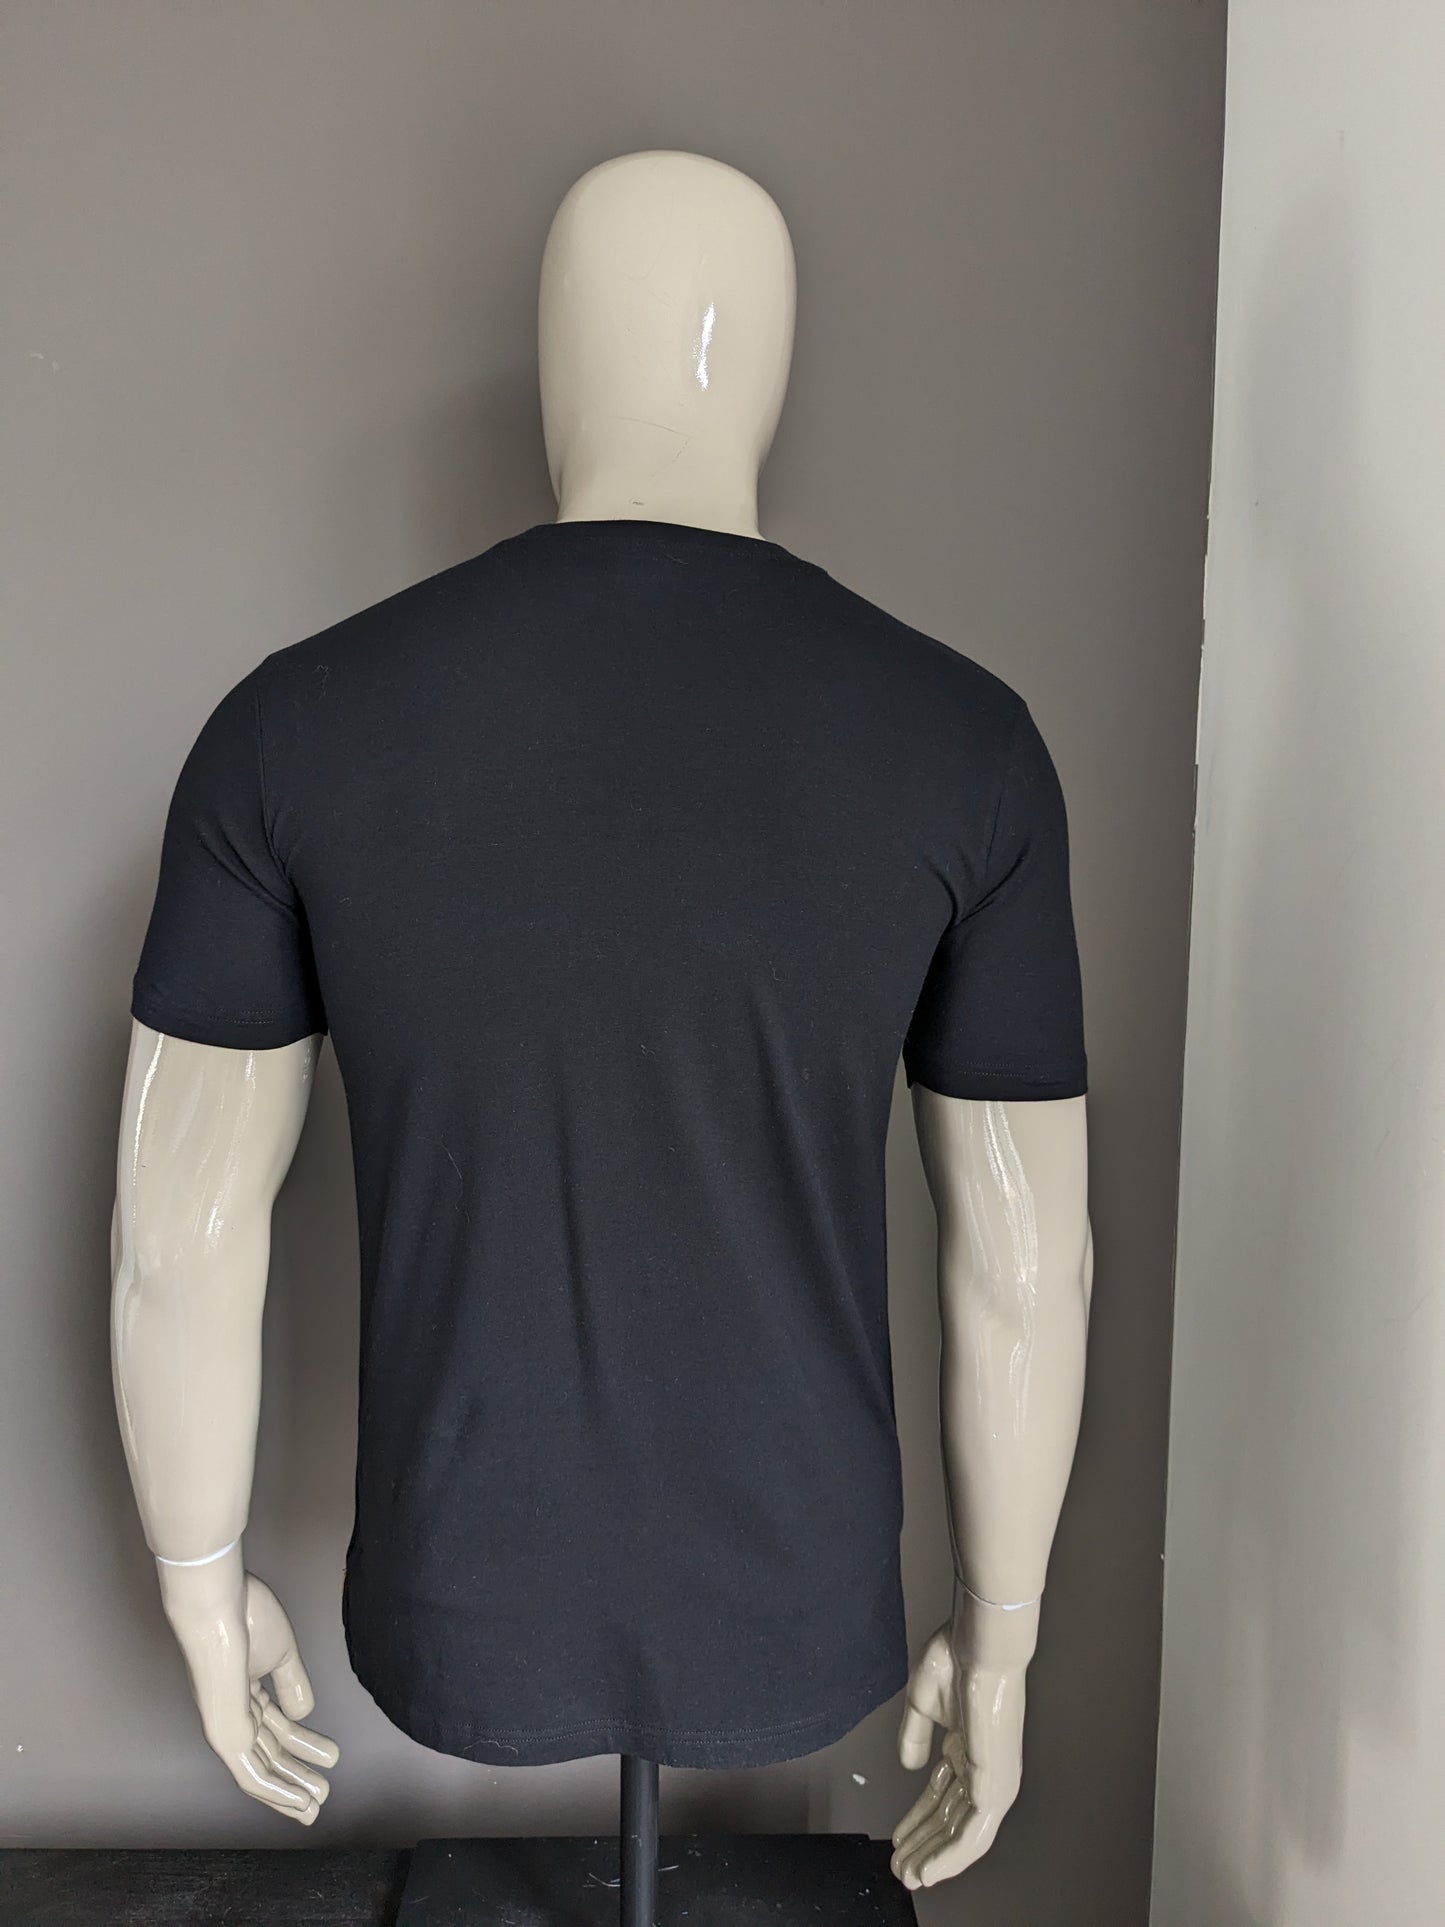 Armani Jeans shirt. Black with print. stretch. Size XL.